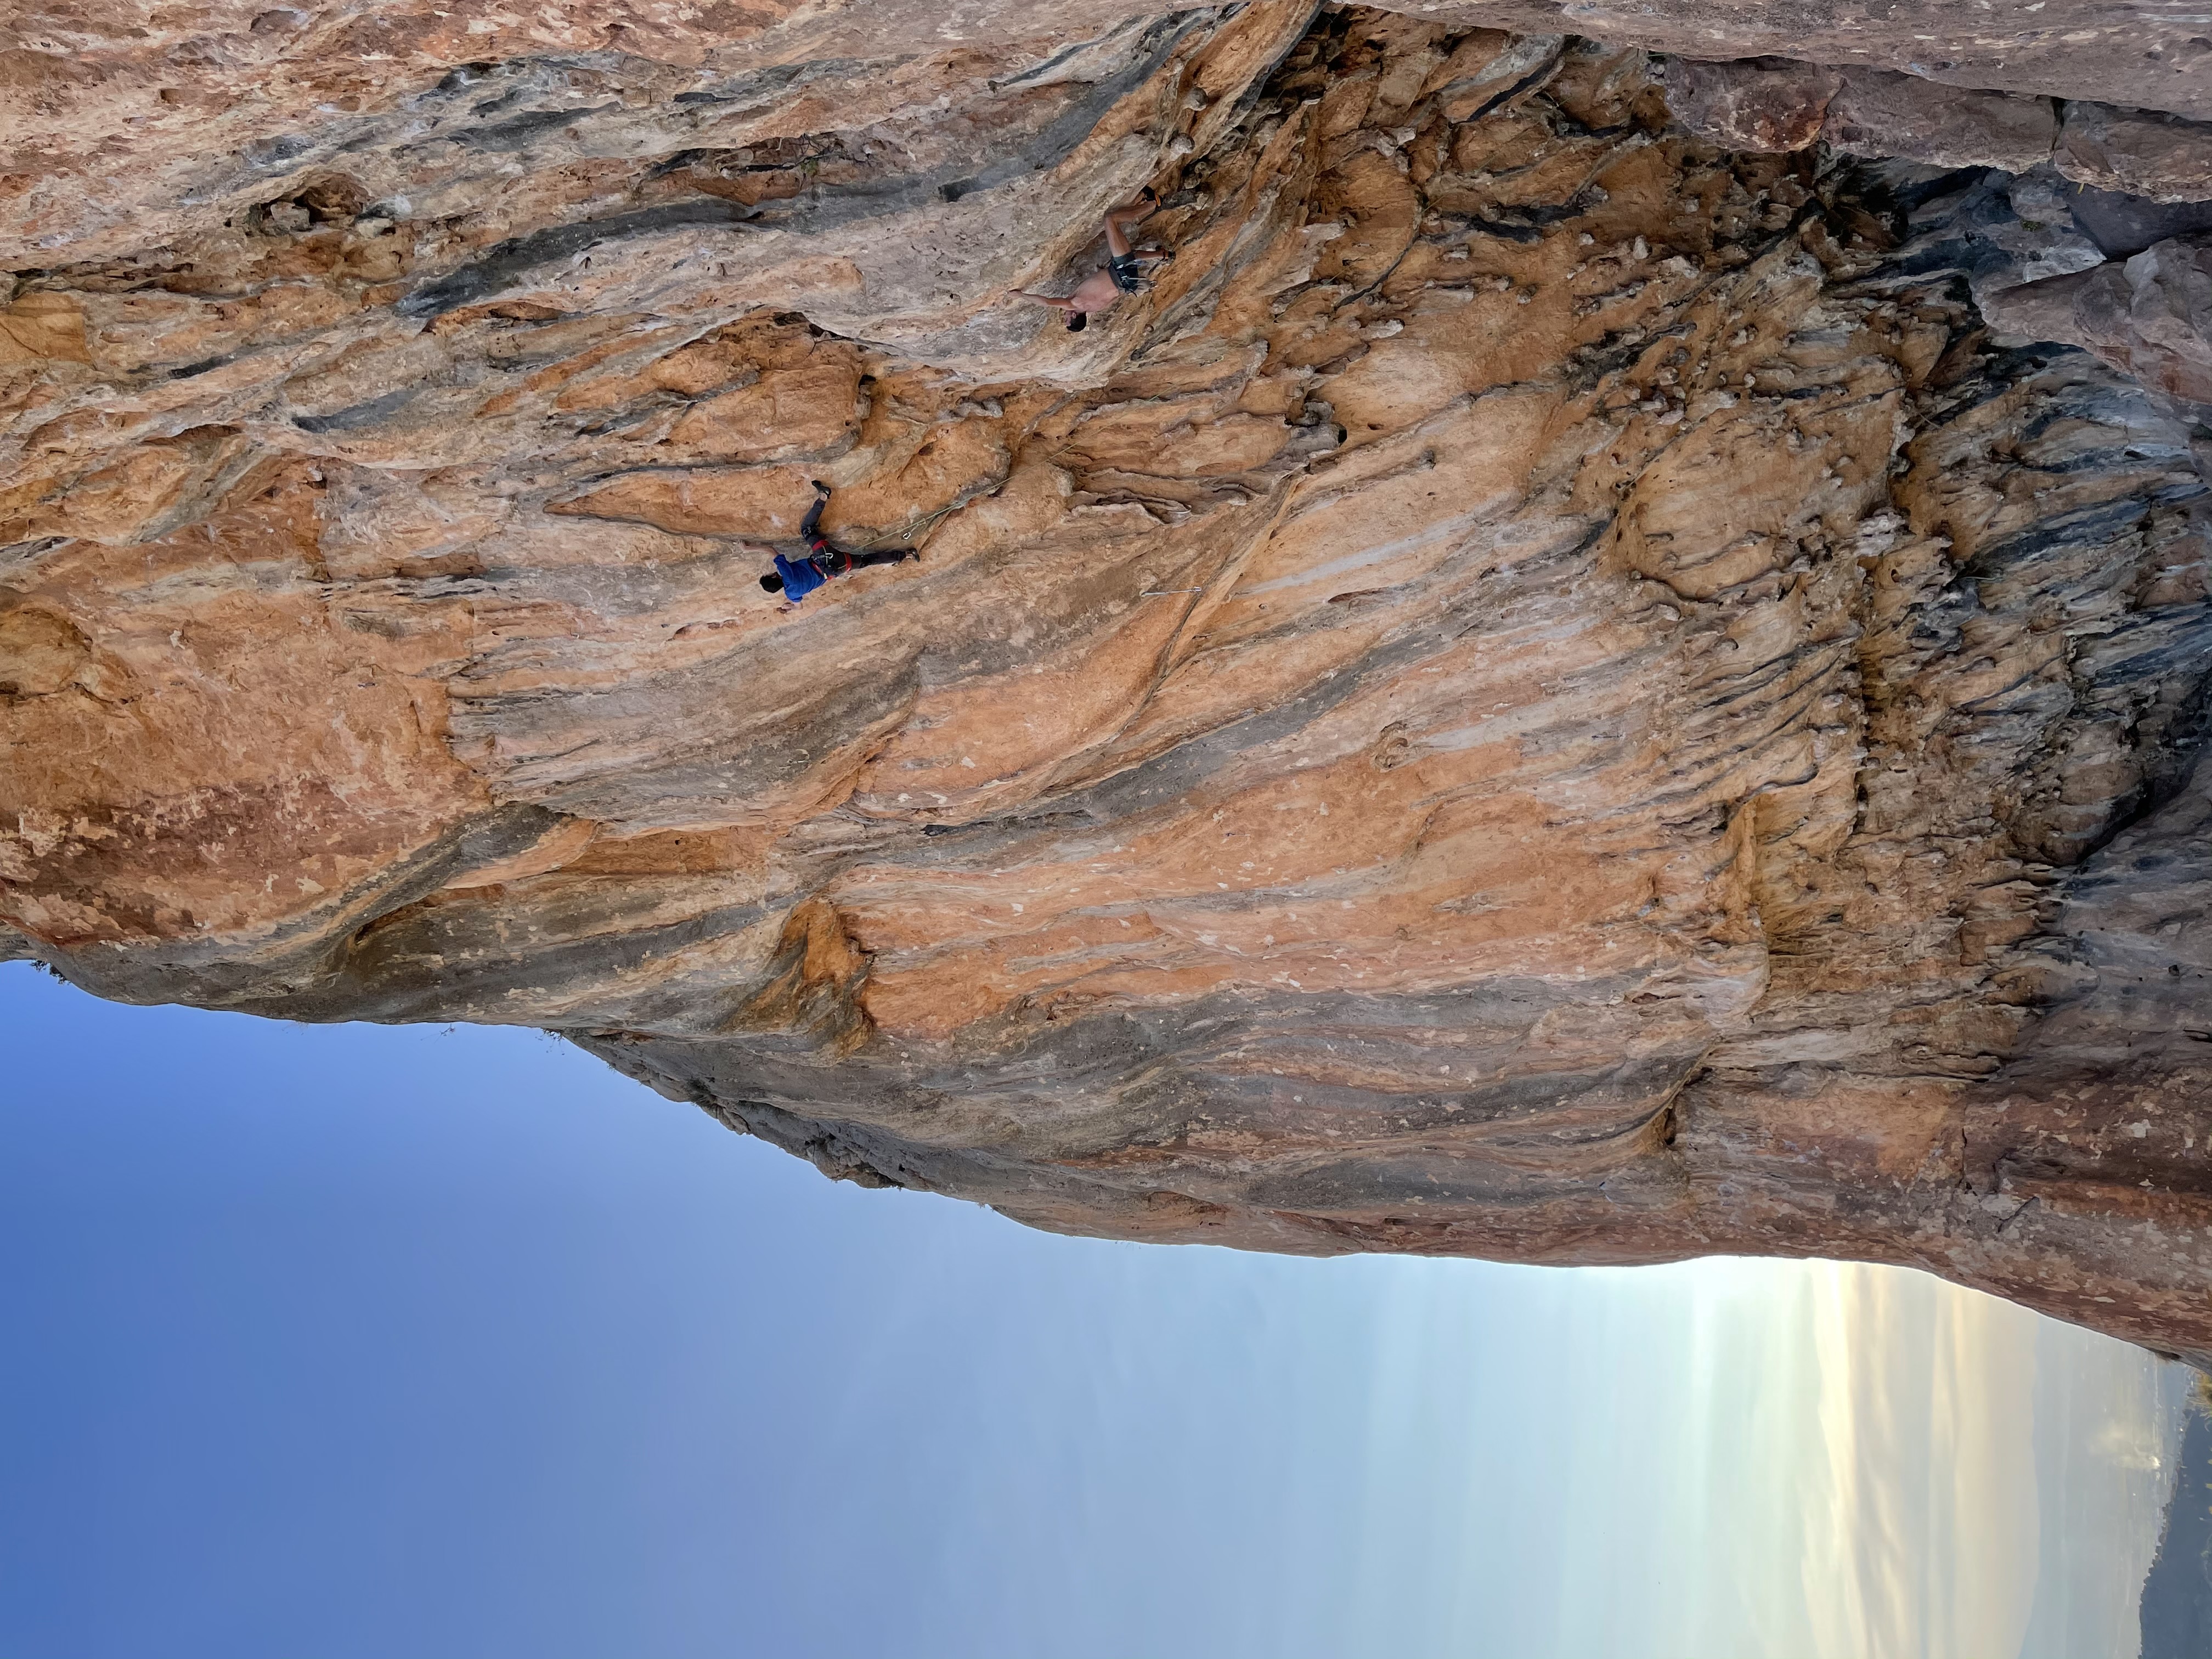 A person sport climbing at the Cogollos sector in Granada